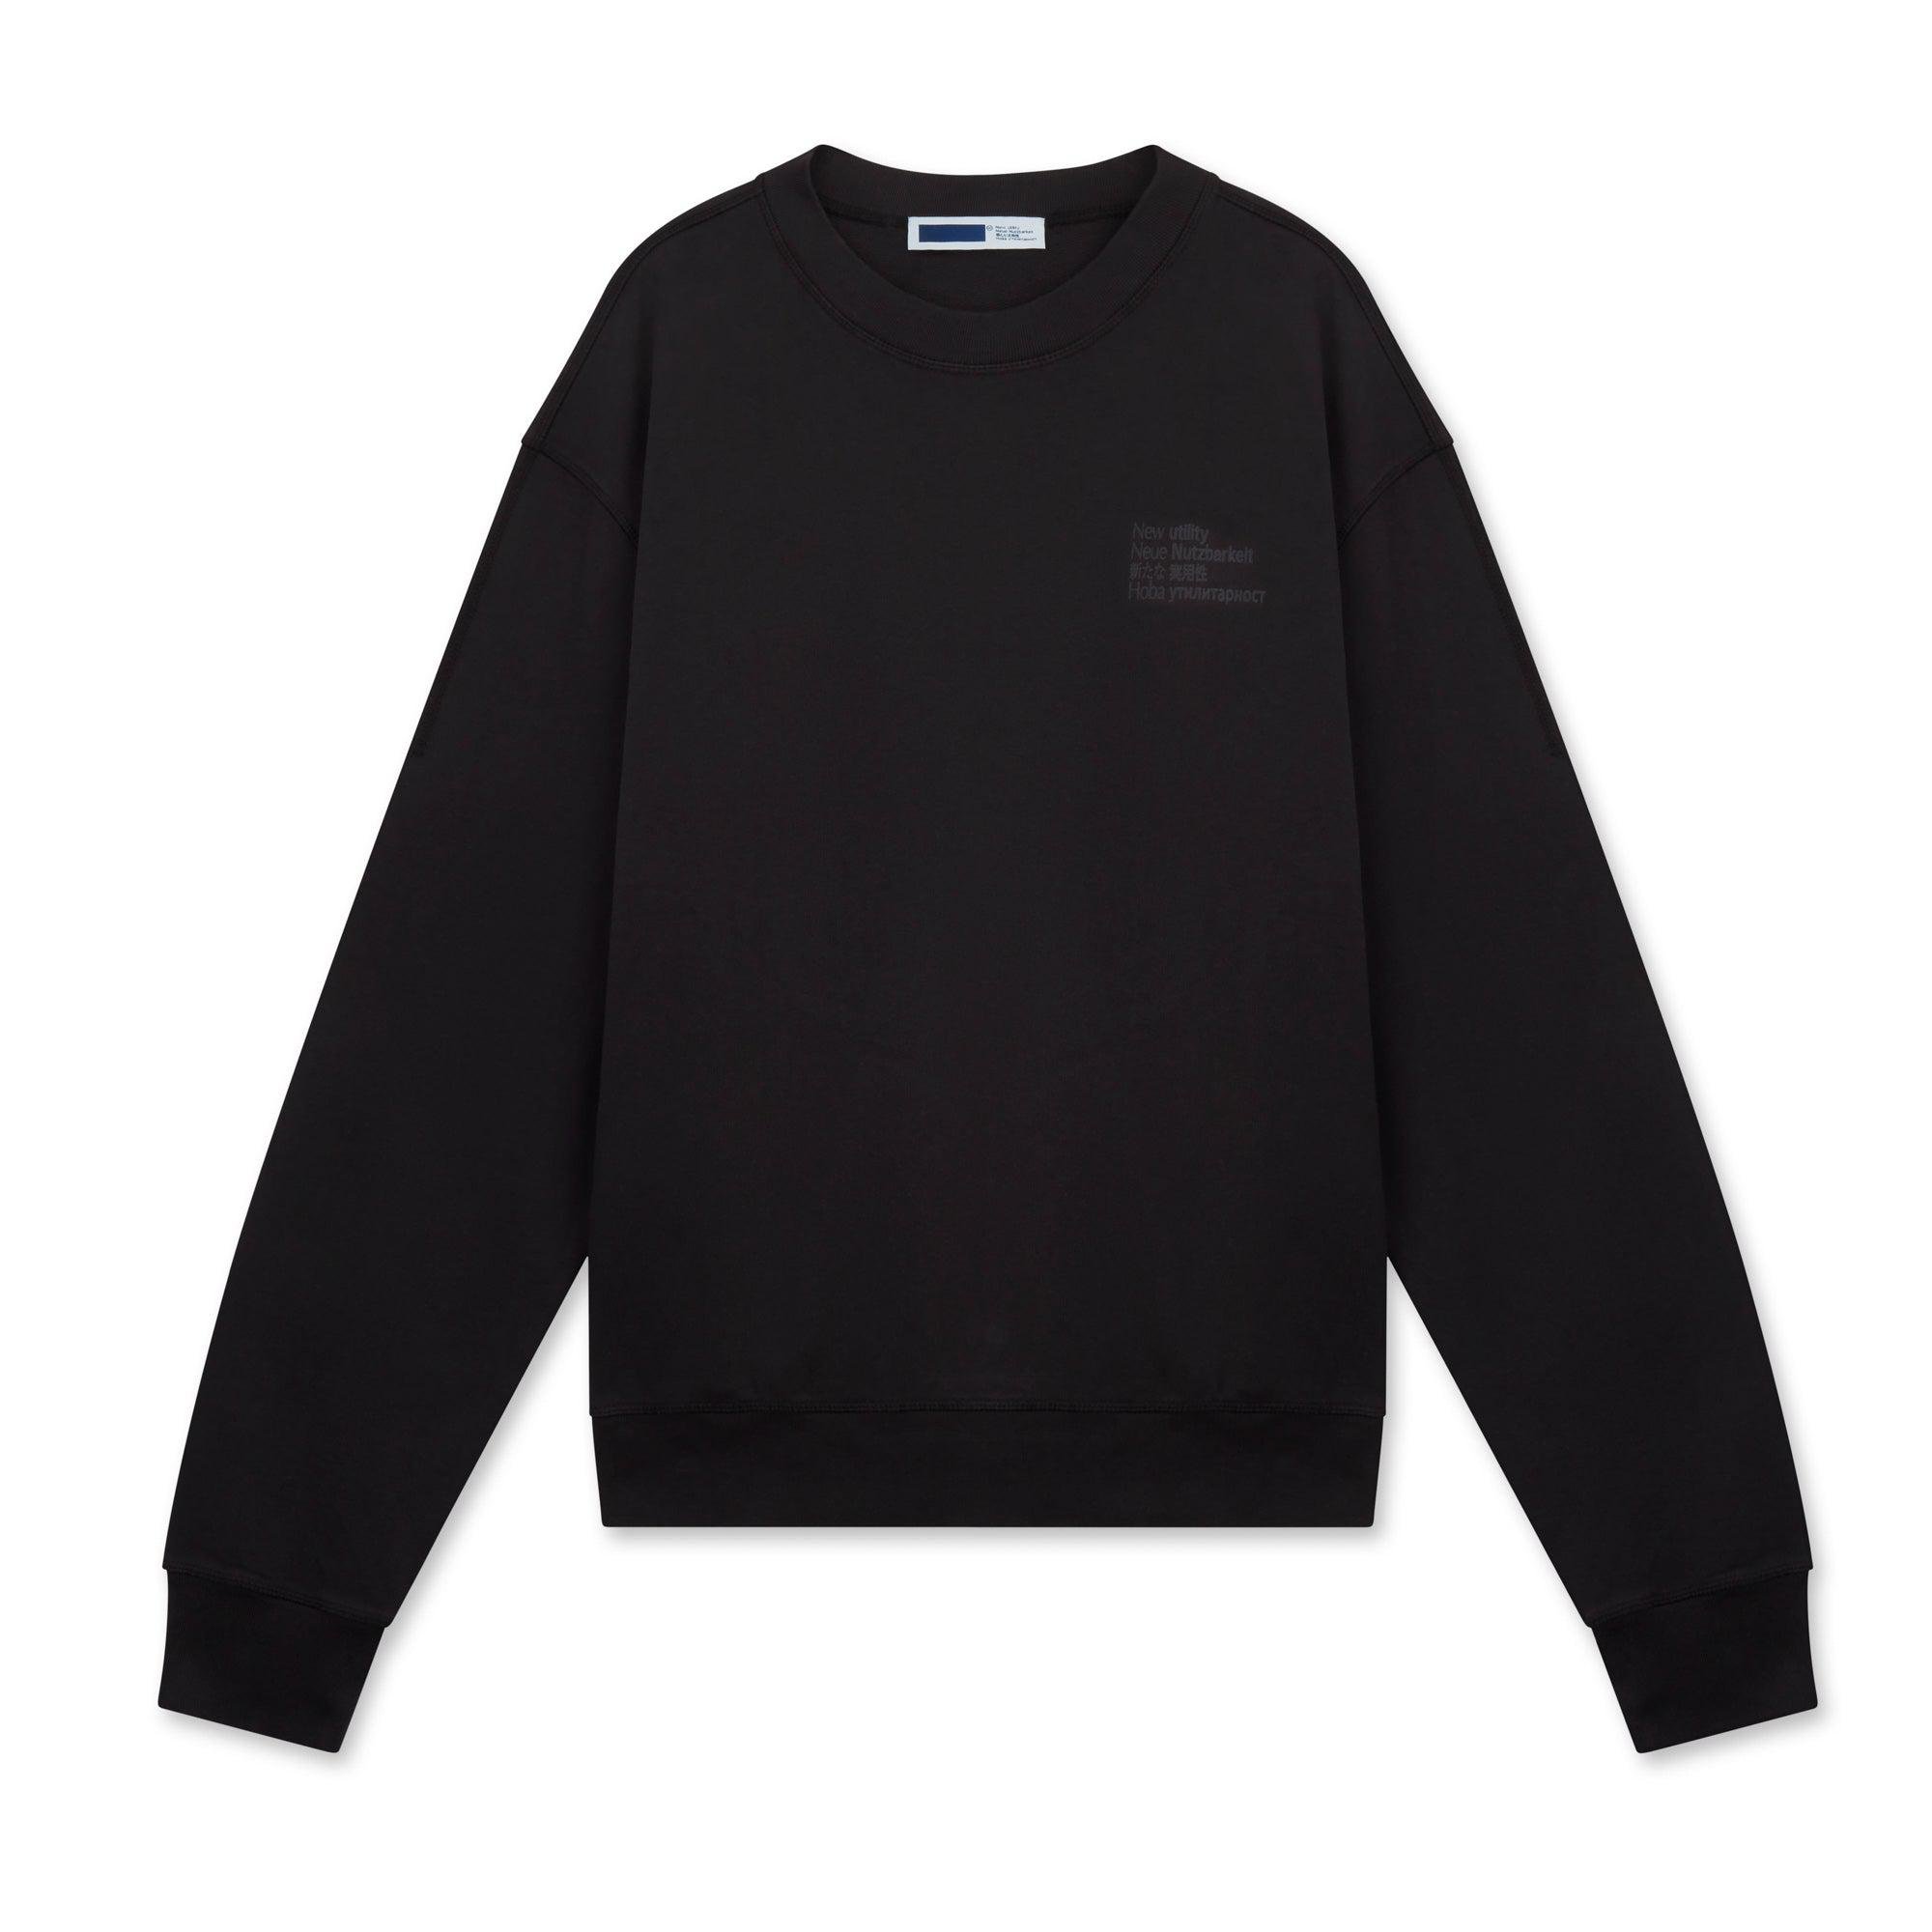 AFFXWRKS New Humility Sweatshirt (Soft Black) by AFFIX